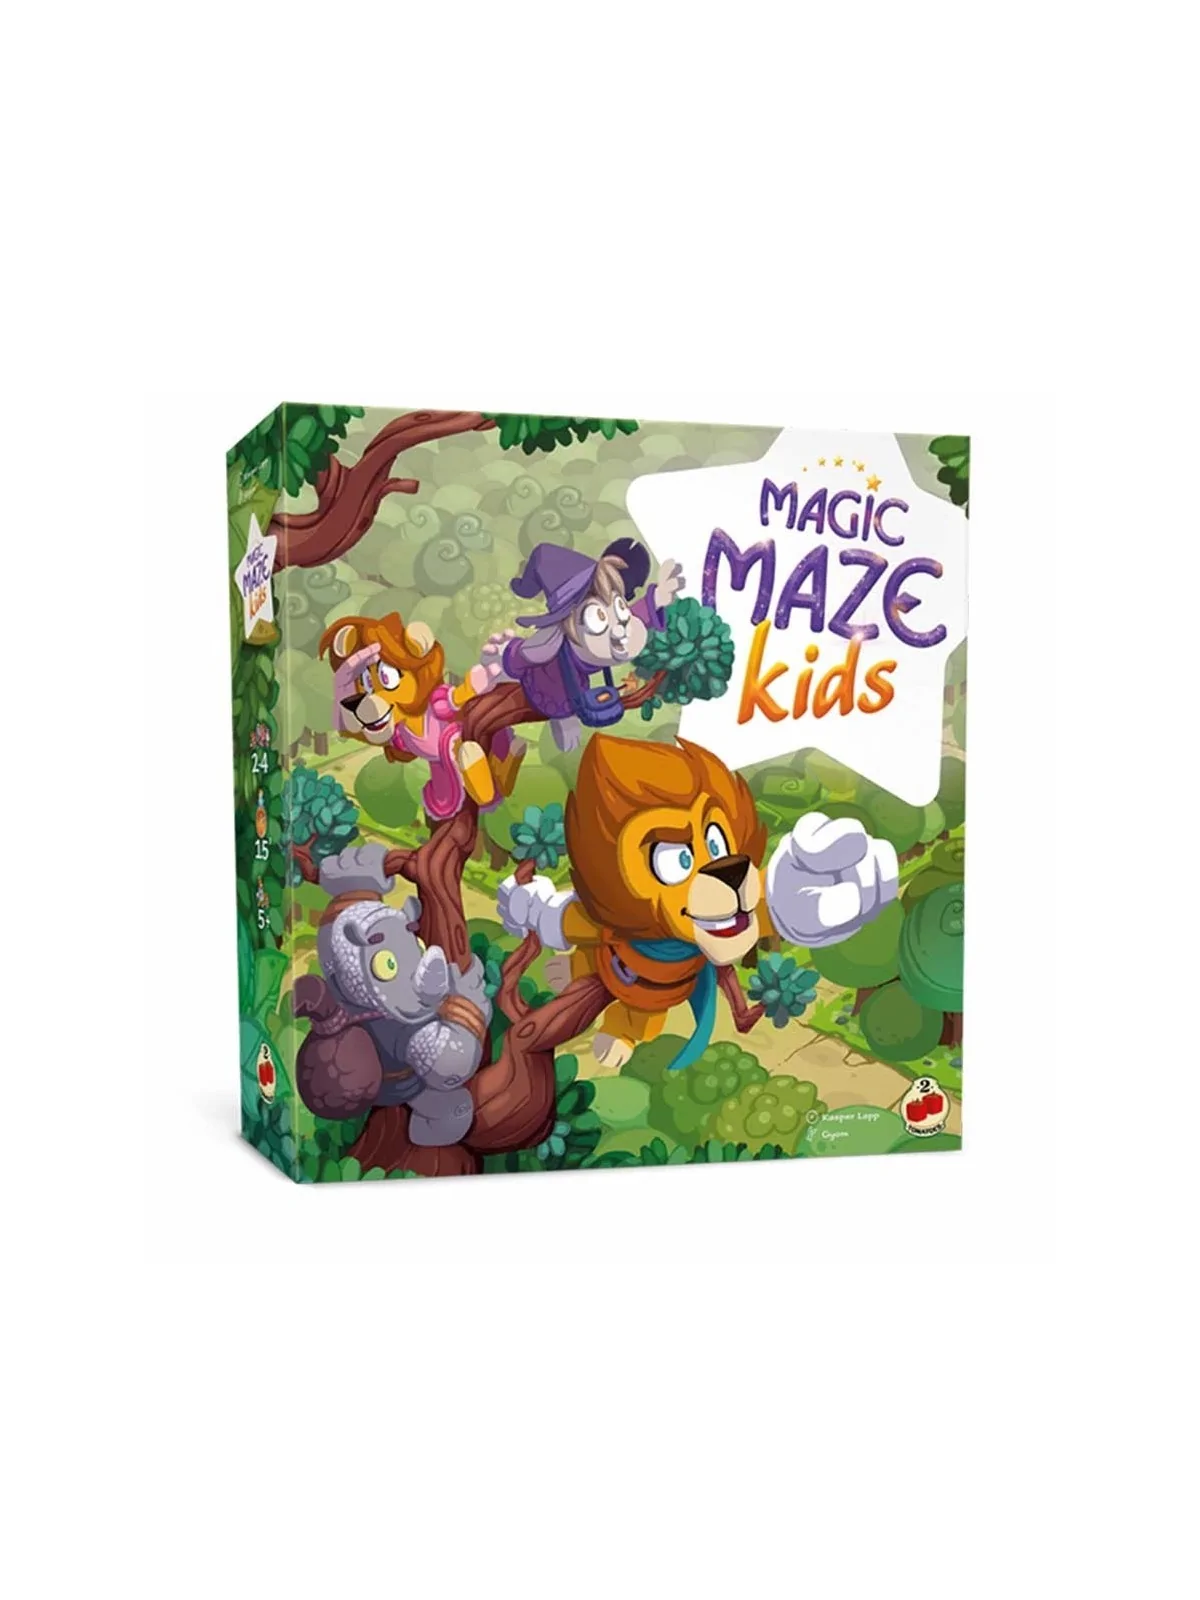 Comprar Magic Maze Kids barato al mejor precio 31,49 € de Two Tomatoes